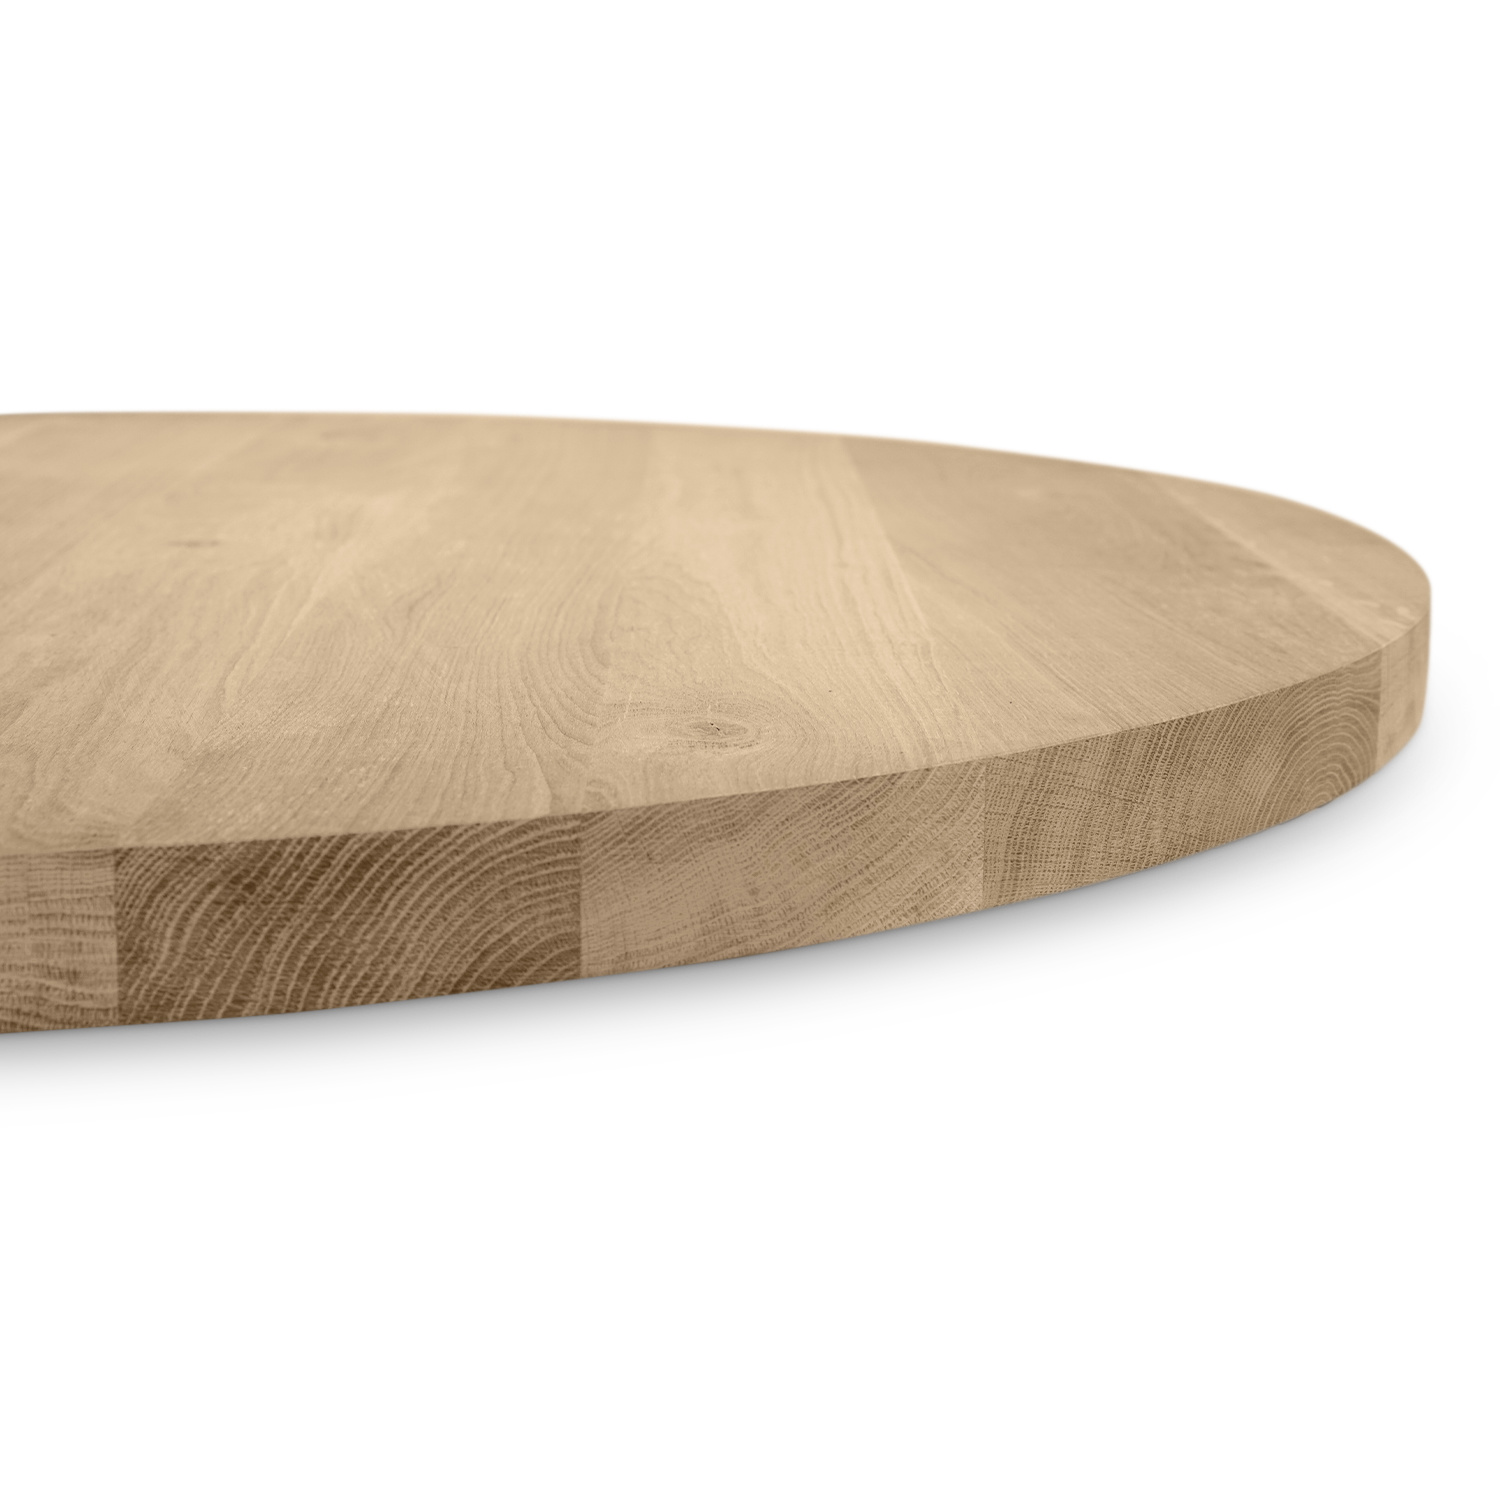  Eiken tafelblad rond - 3 cm dik (1-laag) - Diverse afmetingen - optioneel geborsteld - Foutvrij Europees eikenhout - verlijmd kd 10-12%